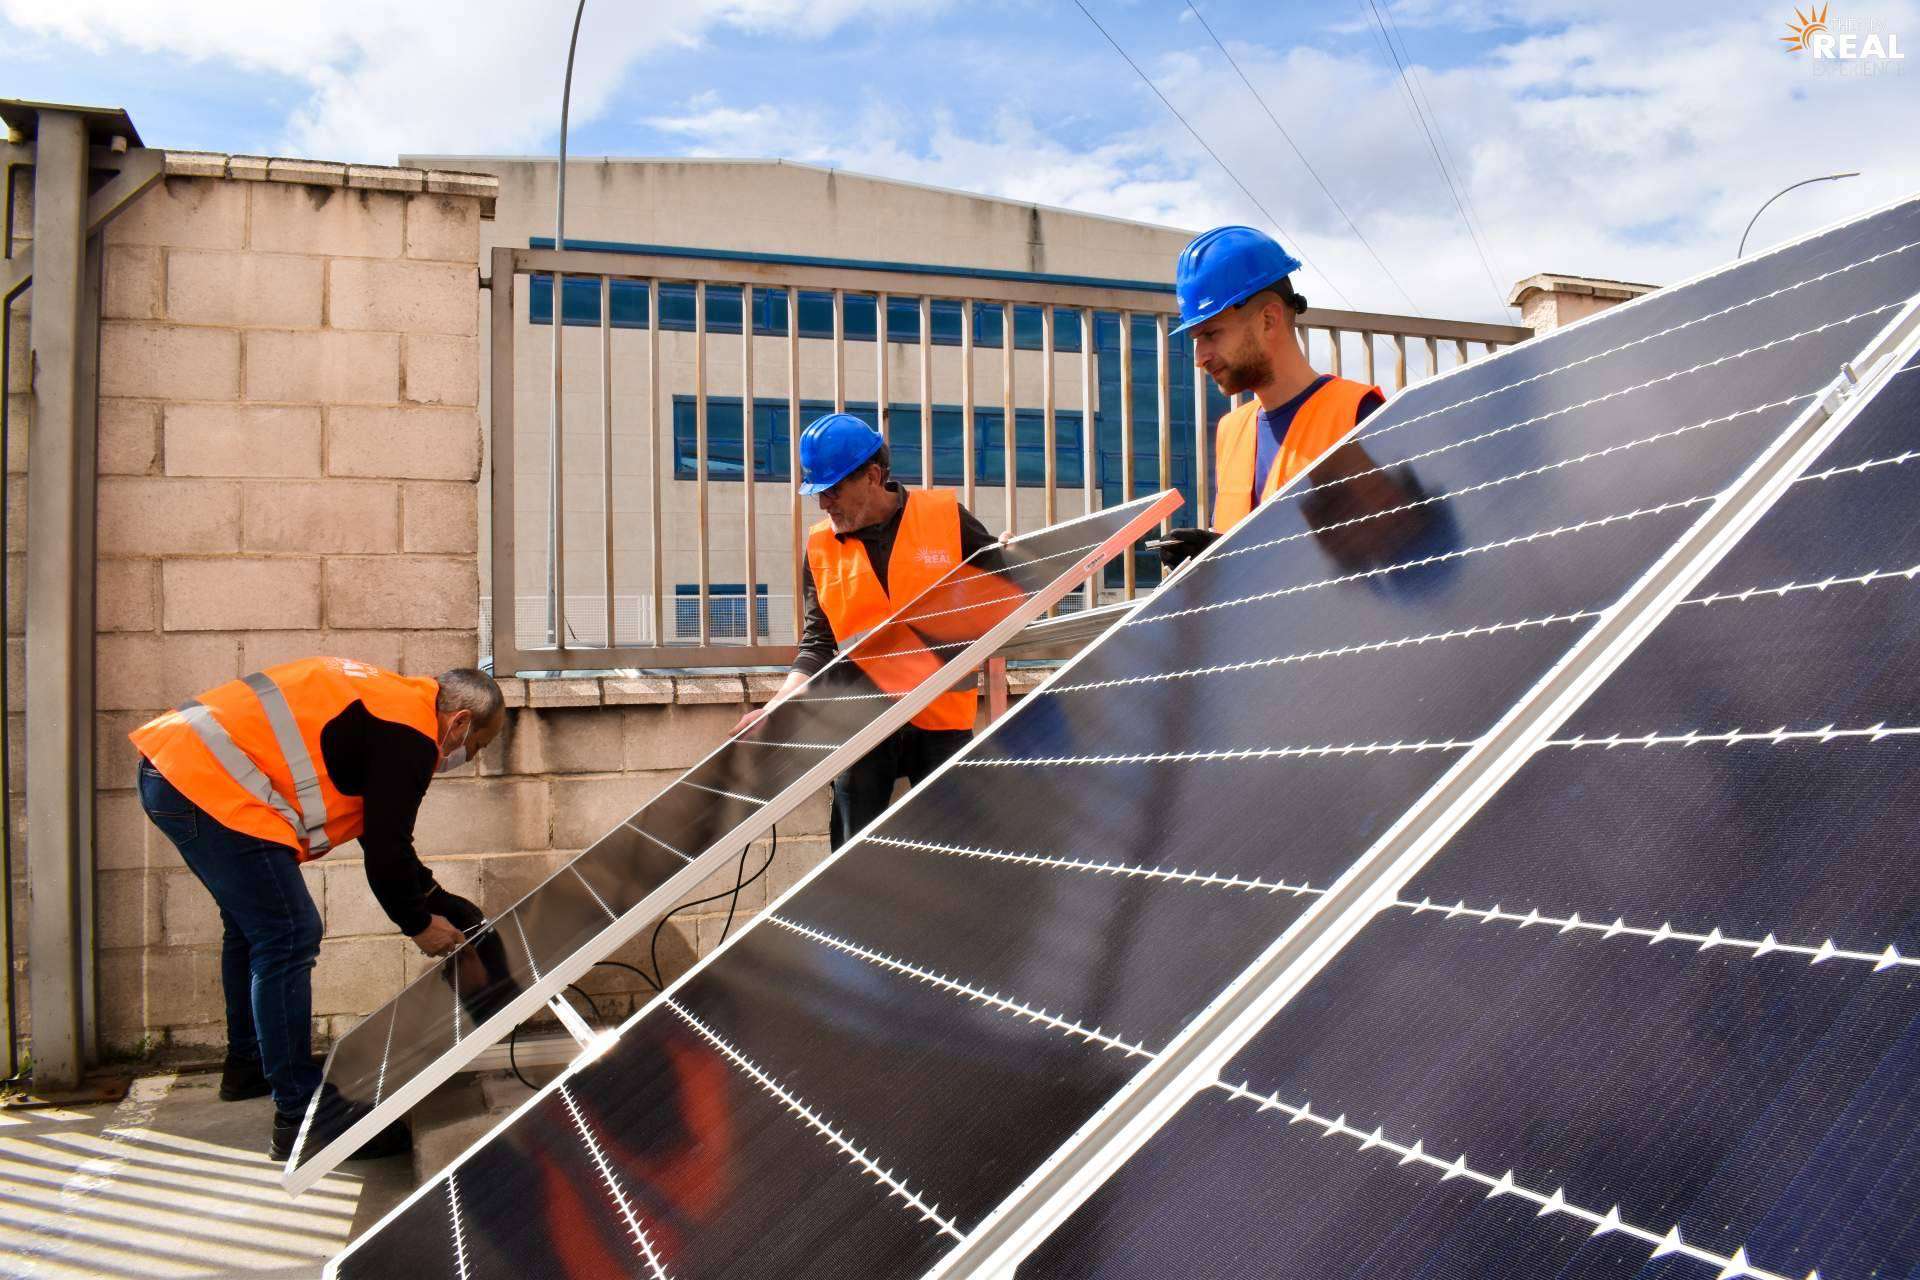 MPV Solar Reference ofrece formación en energía fotovoltaica